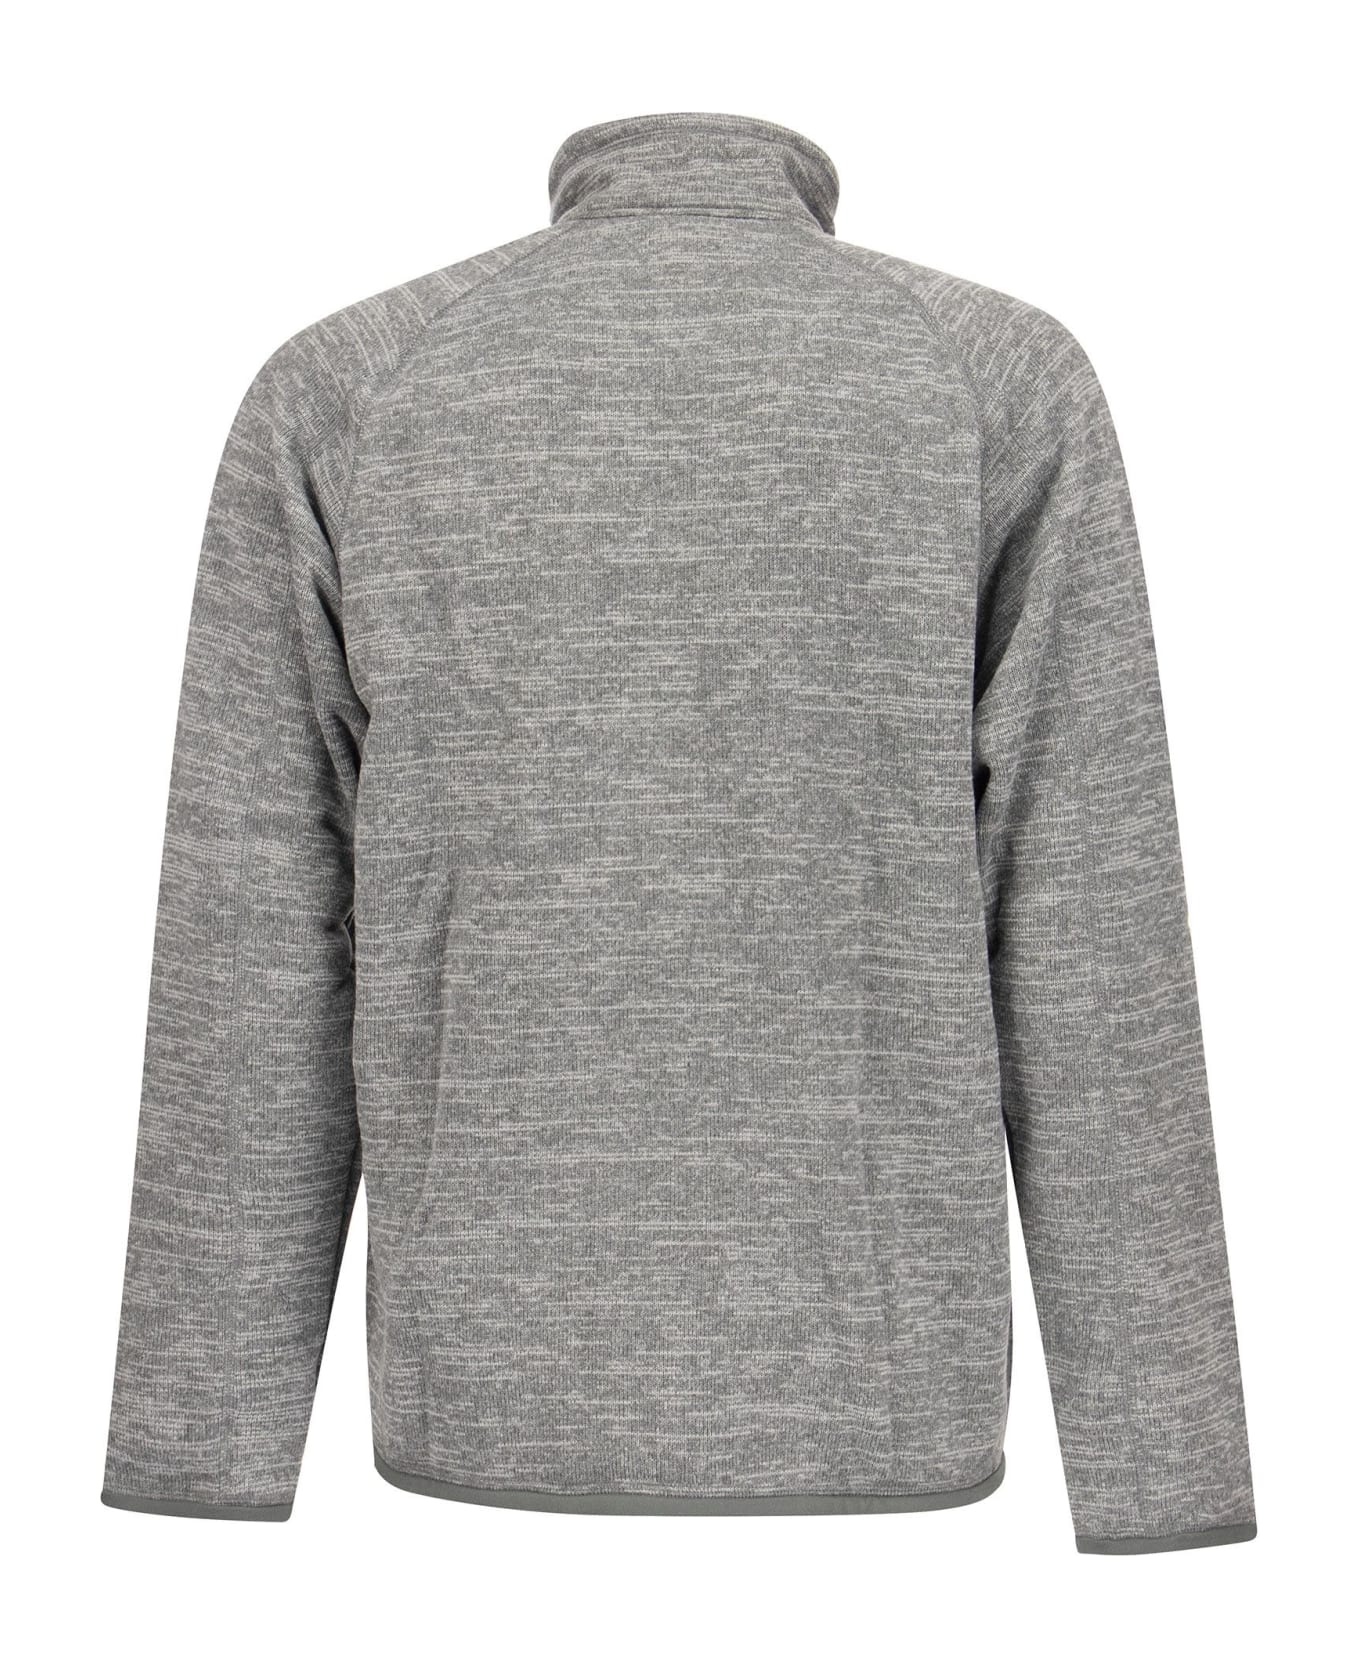 Patagonia Better Sweater Fleece Jacket - Grey ニットウェア